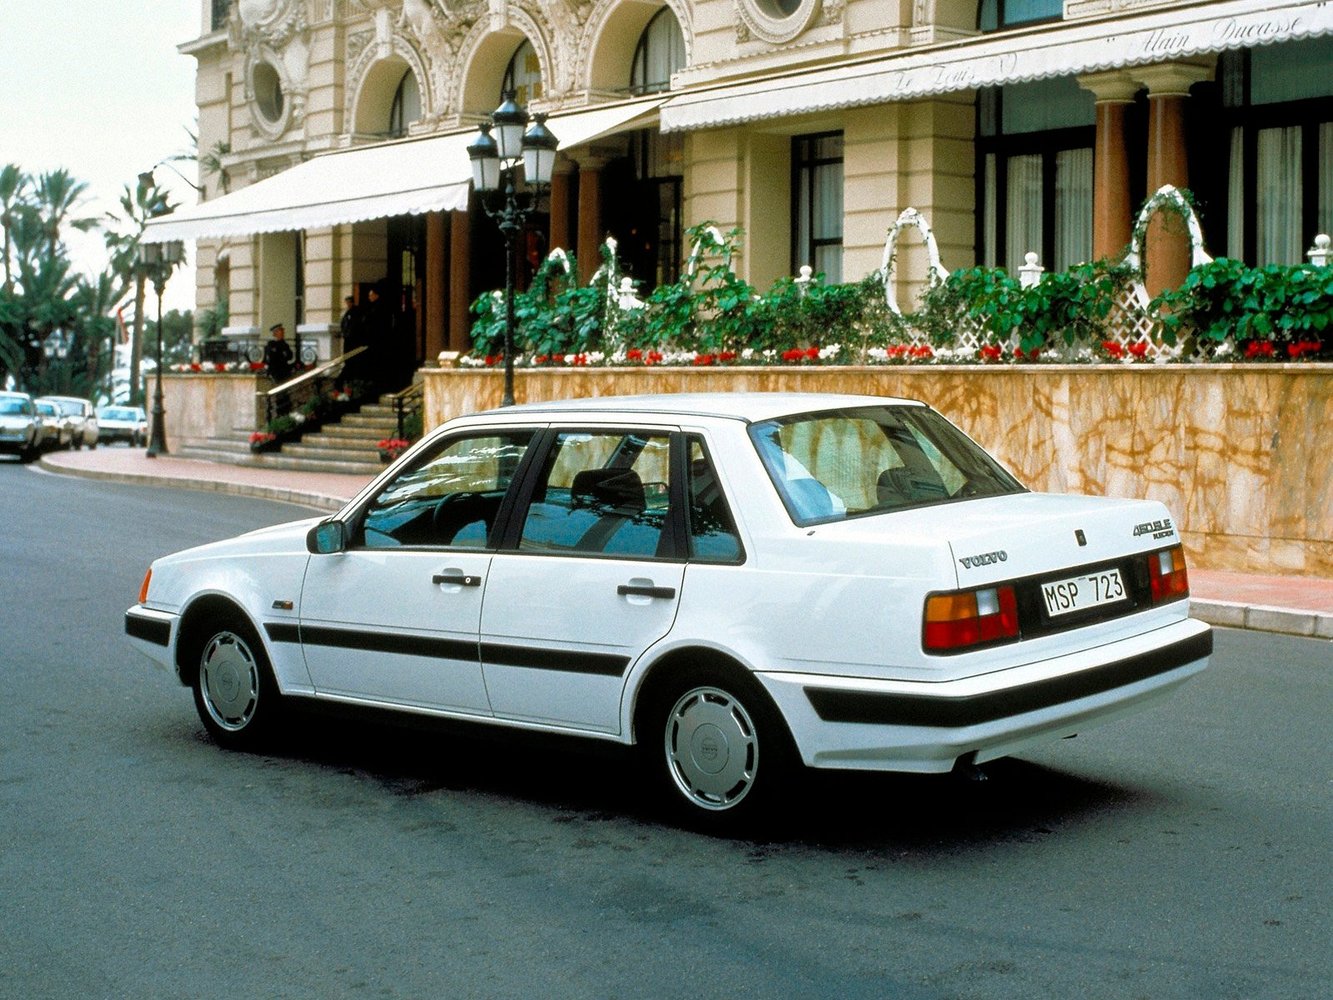 седан Volvo 460 1988 - 1997г выпуска модификация 1.6 MT (82 л.с.)